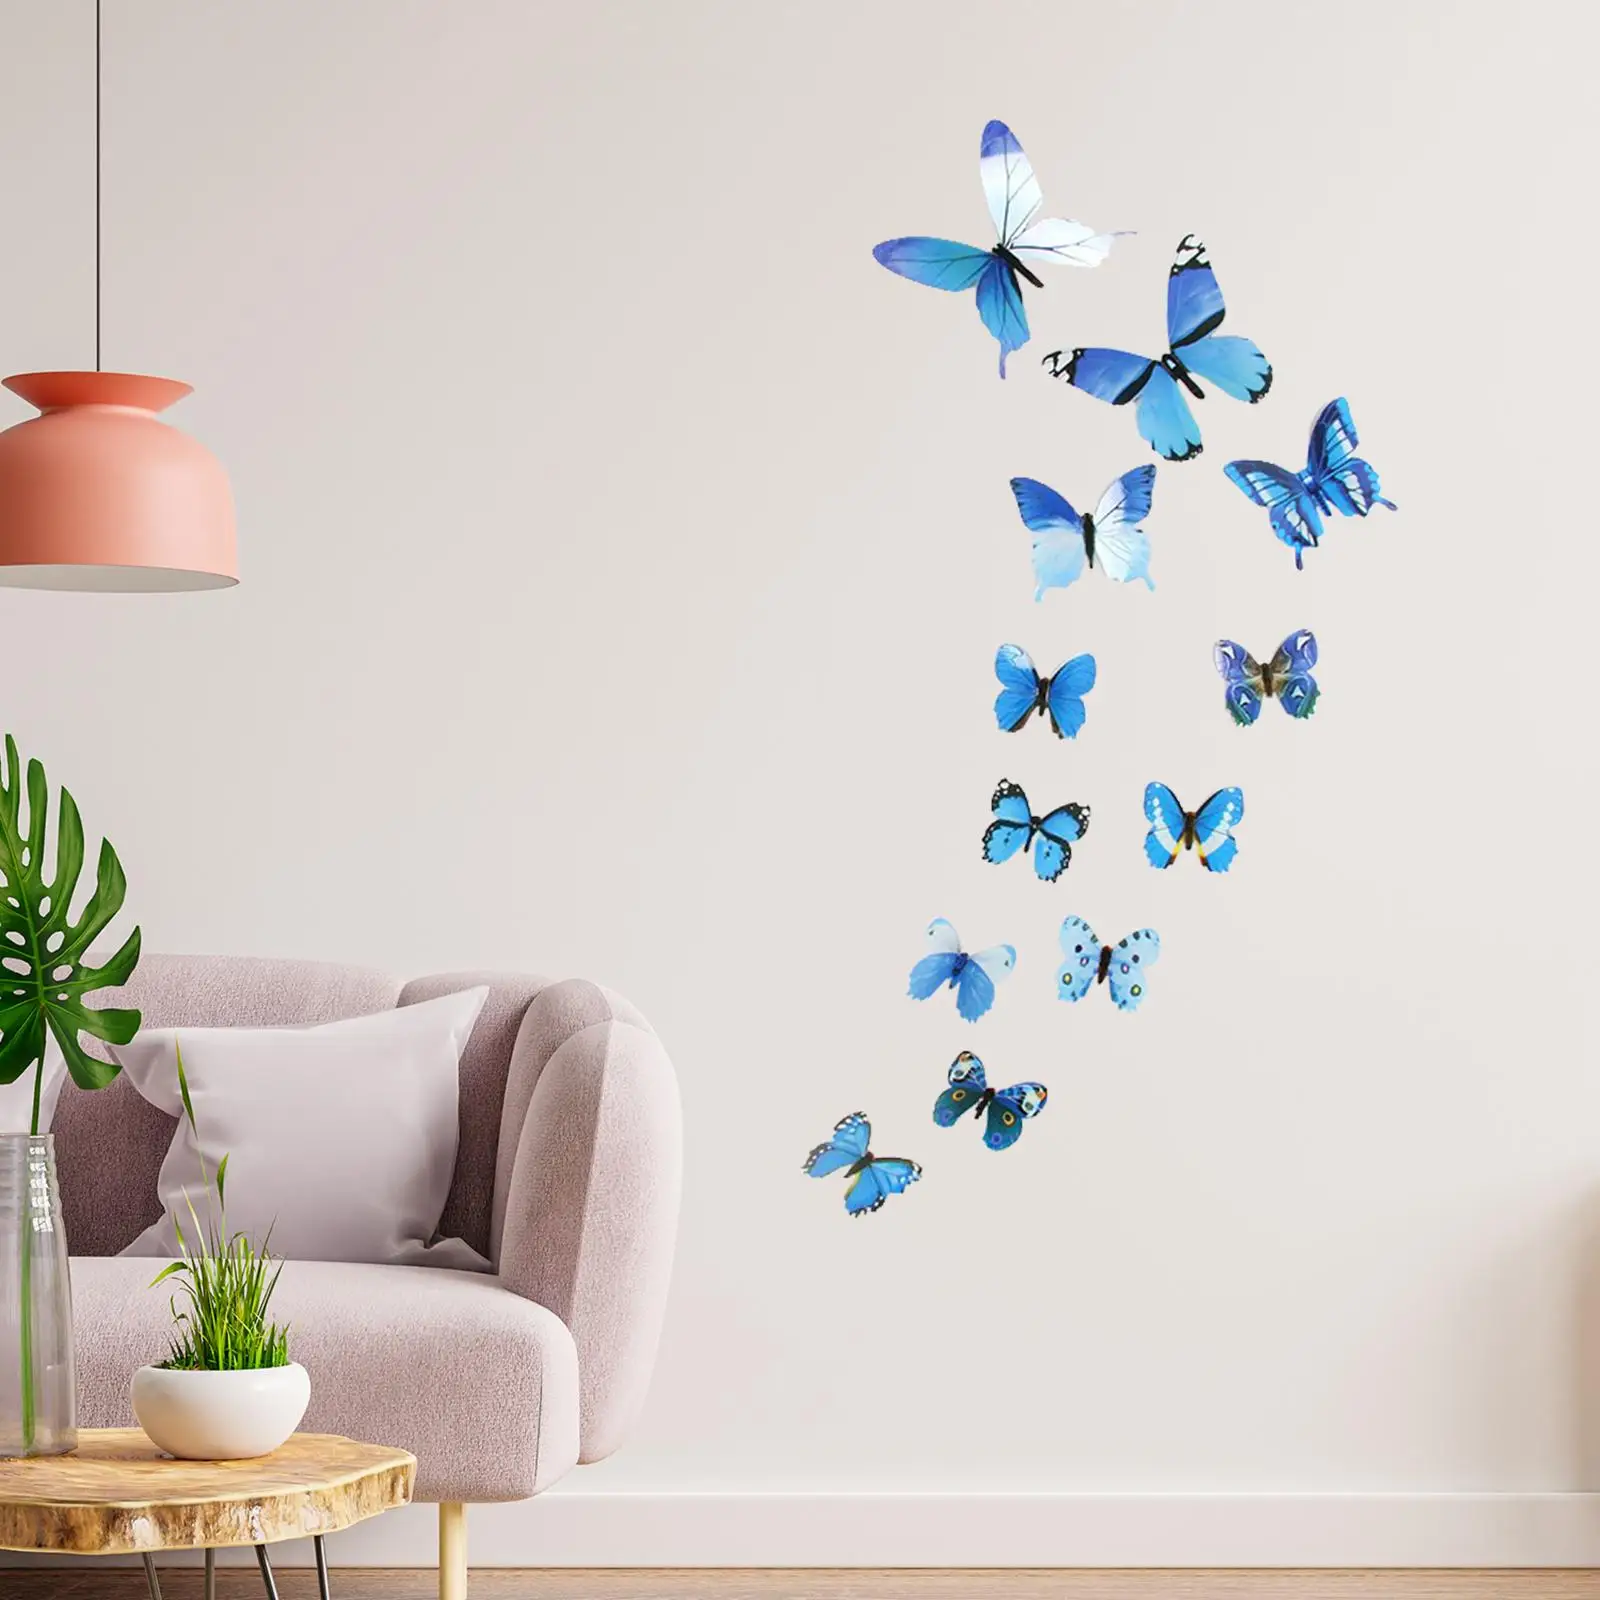 12 бр. стикери с пеперуди, декоративни светещи 3D стикери с пеперуди от стените за врати